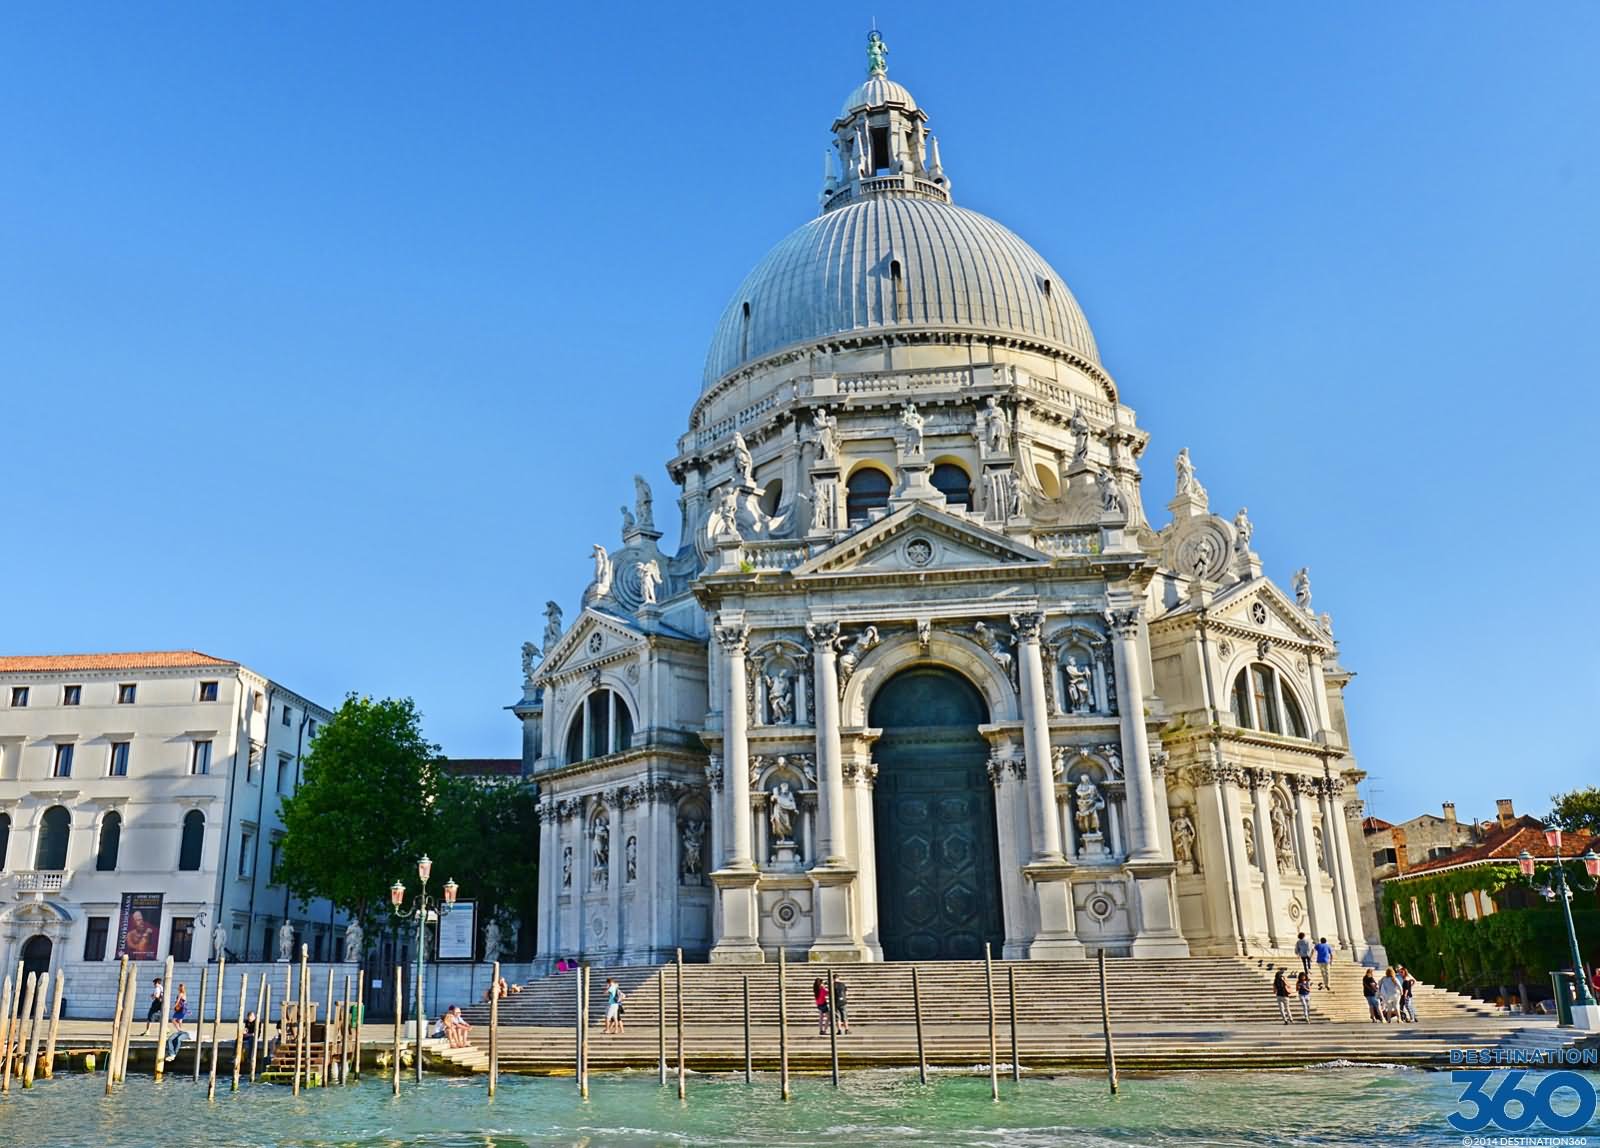 30 Most Beautiful Santa Maria della Salute, Venice Pictures And Images